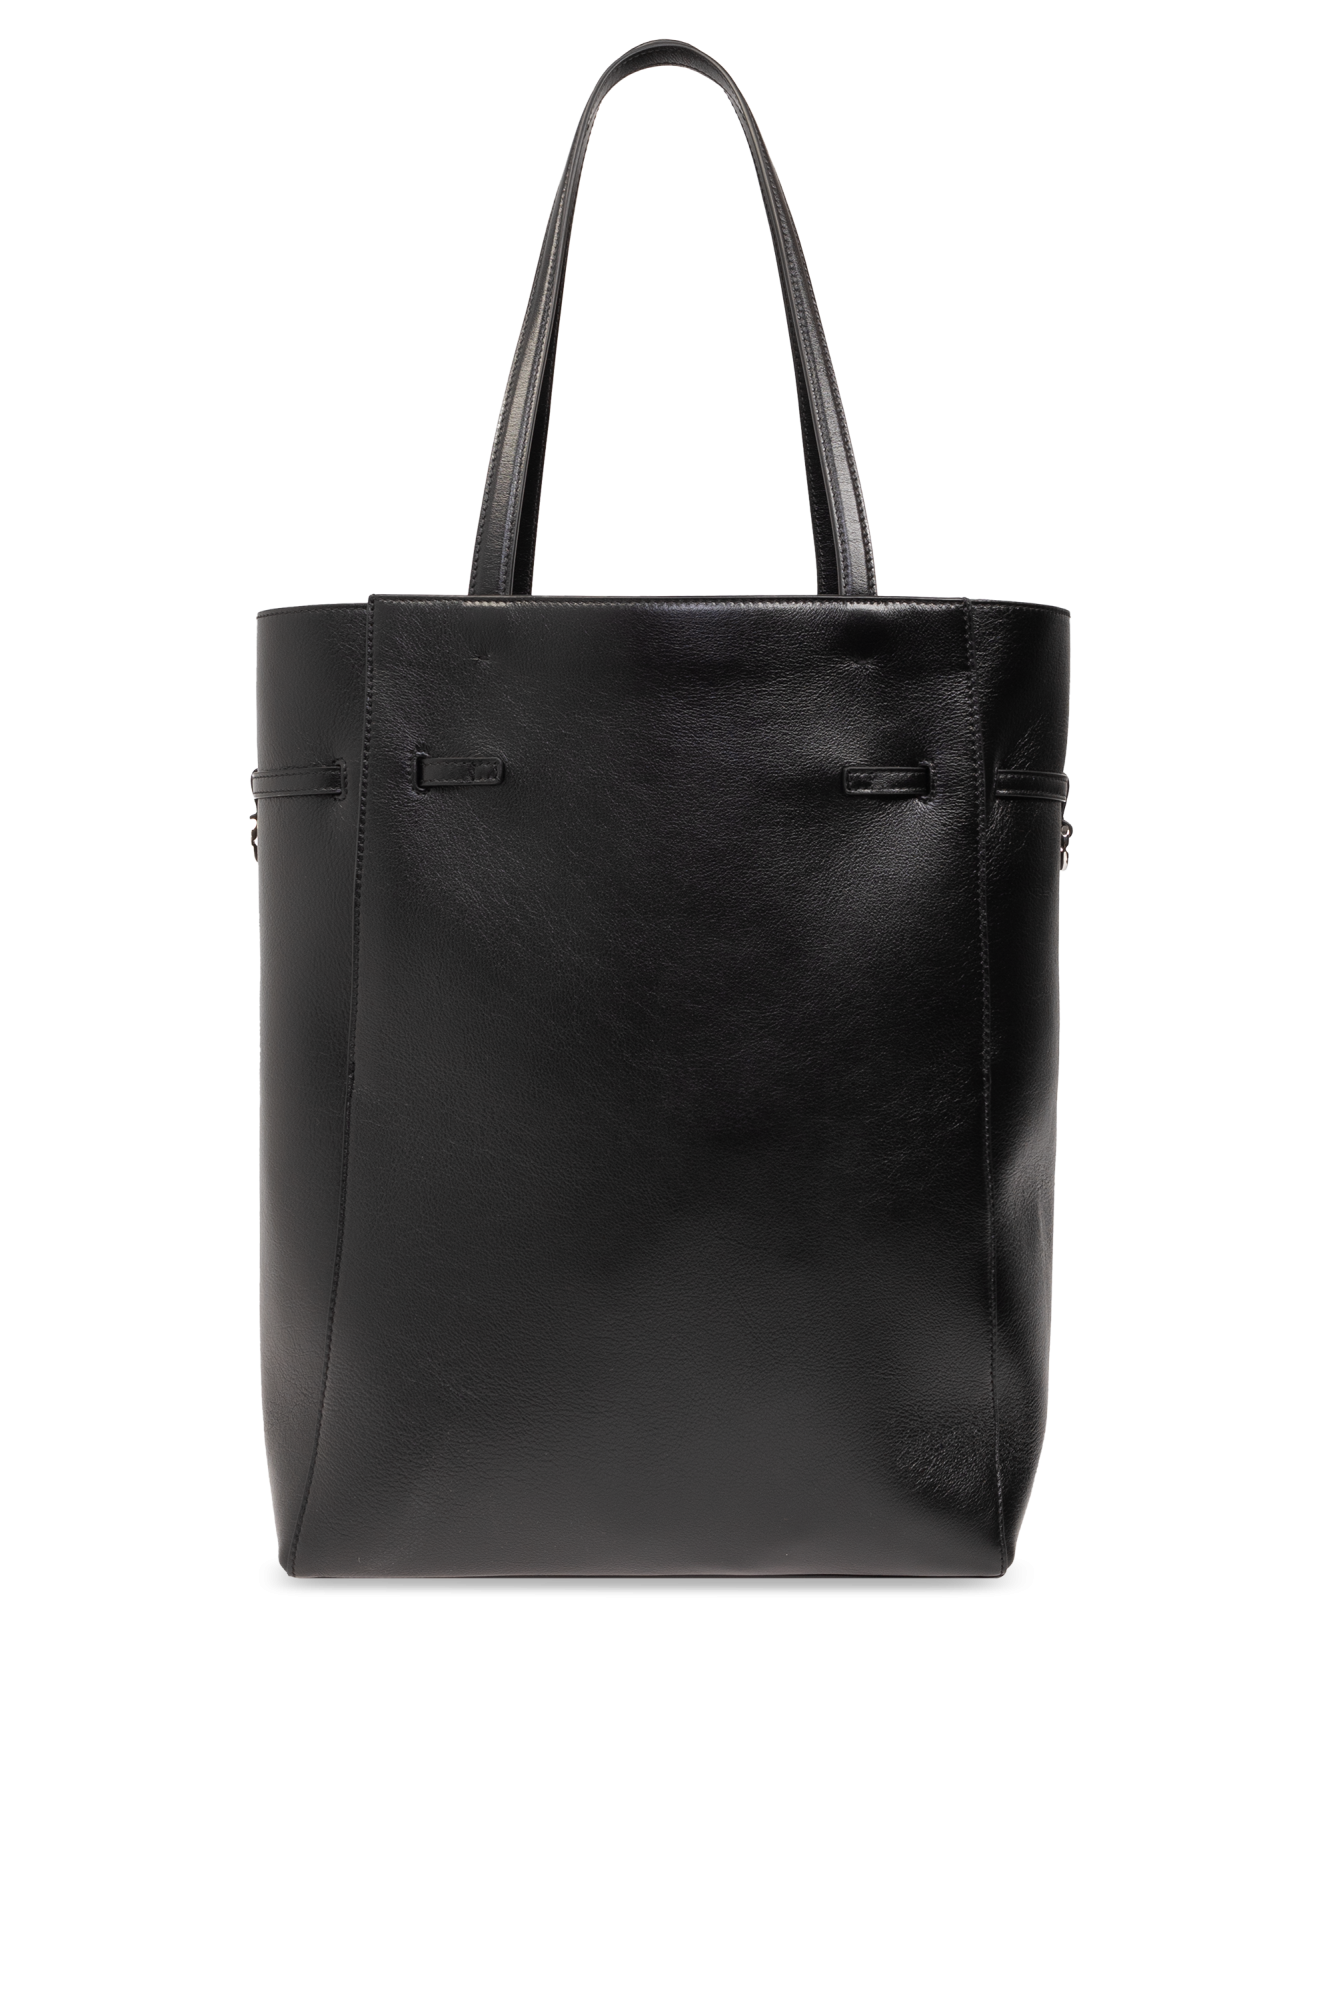 Givenchy ‘Voyou Medium’ Shopper Bag